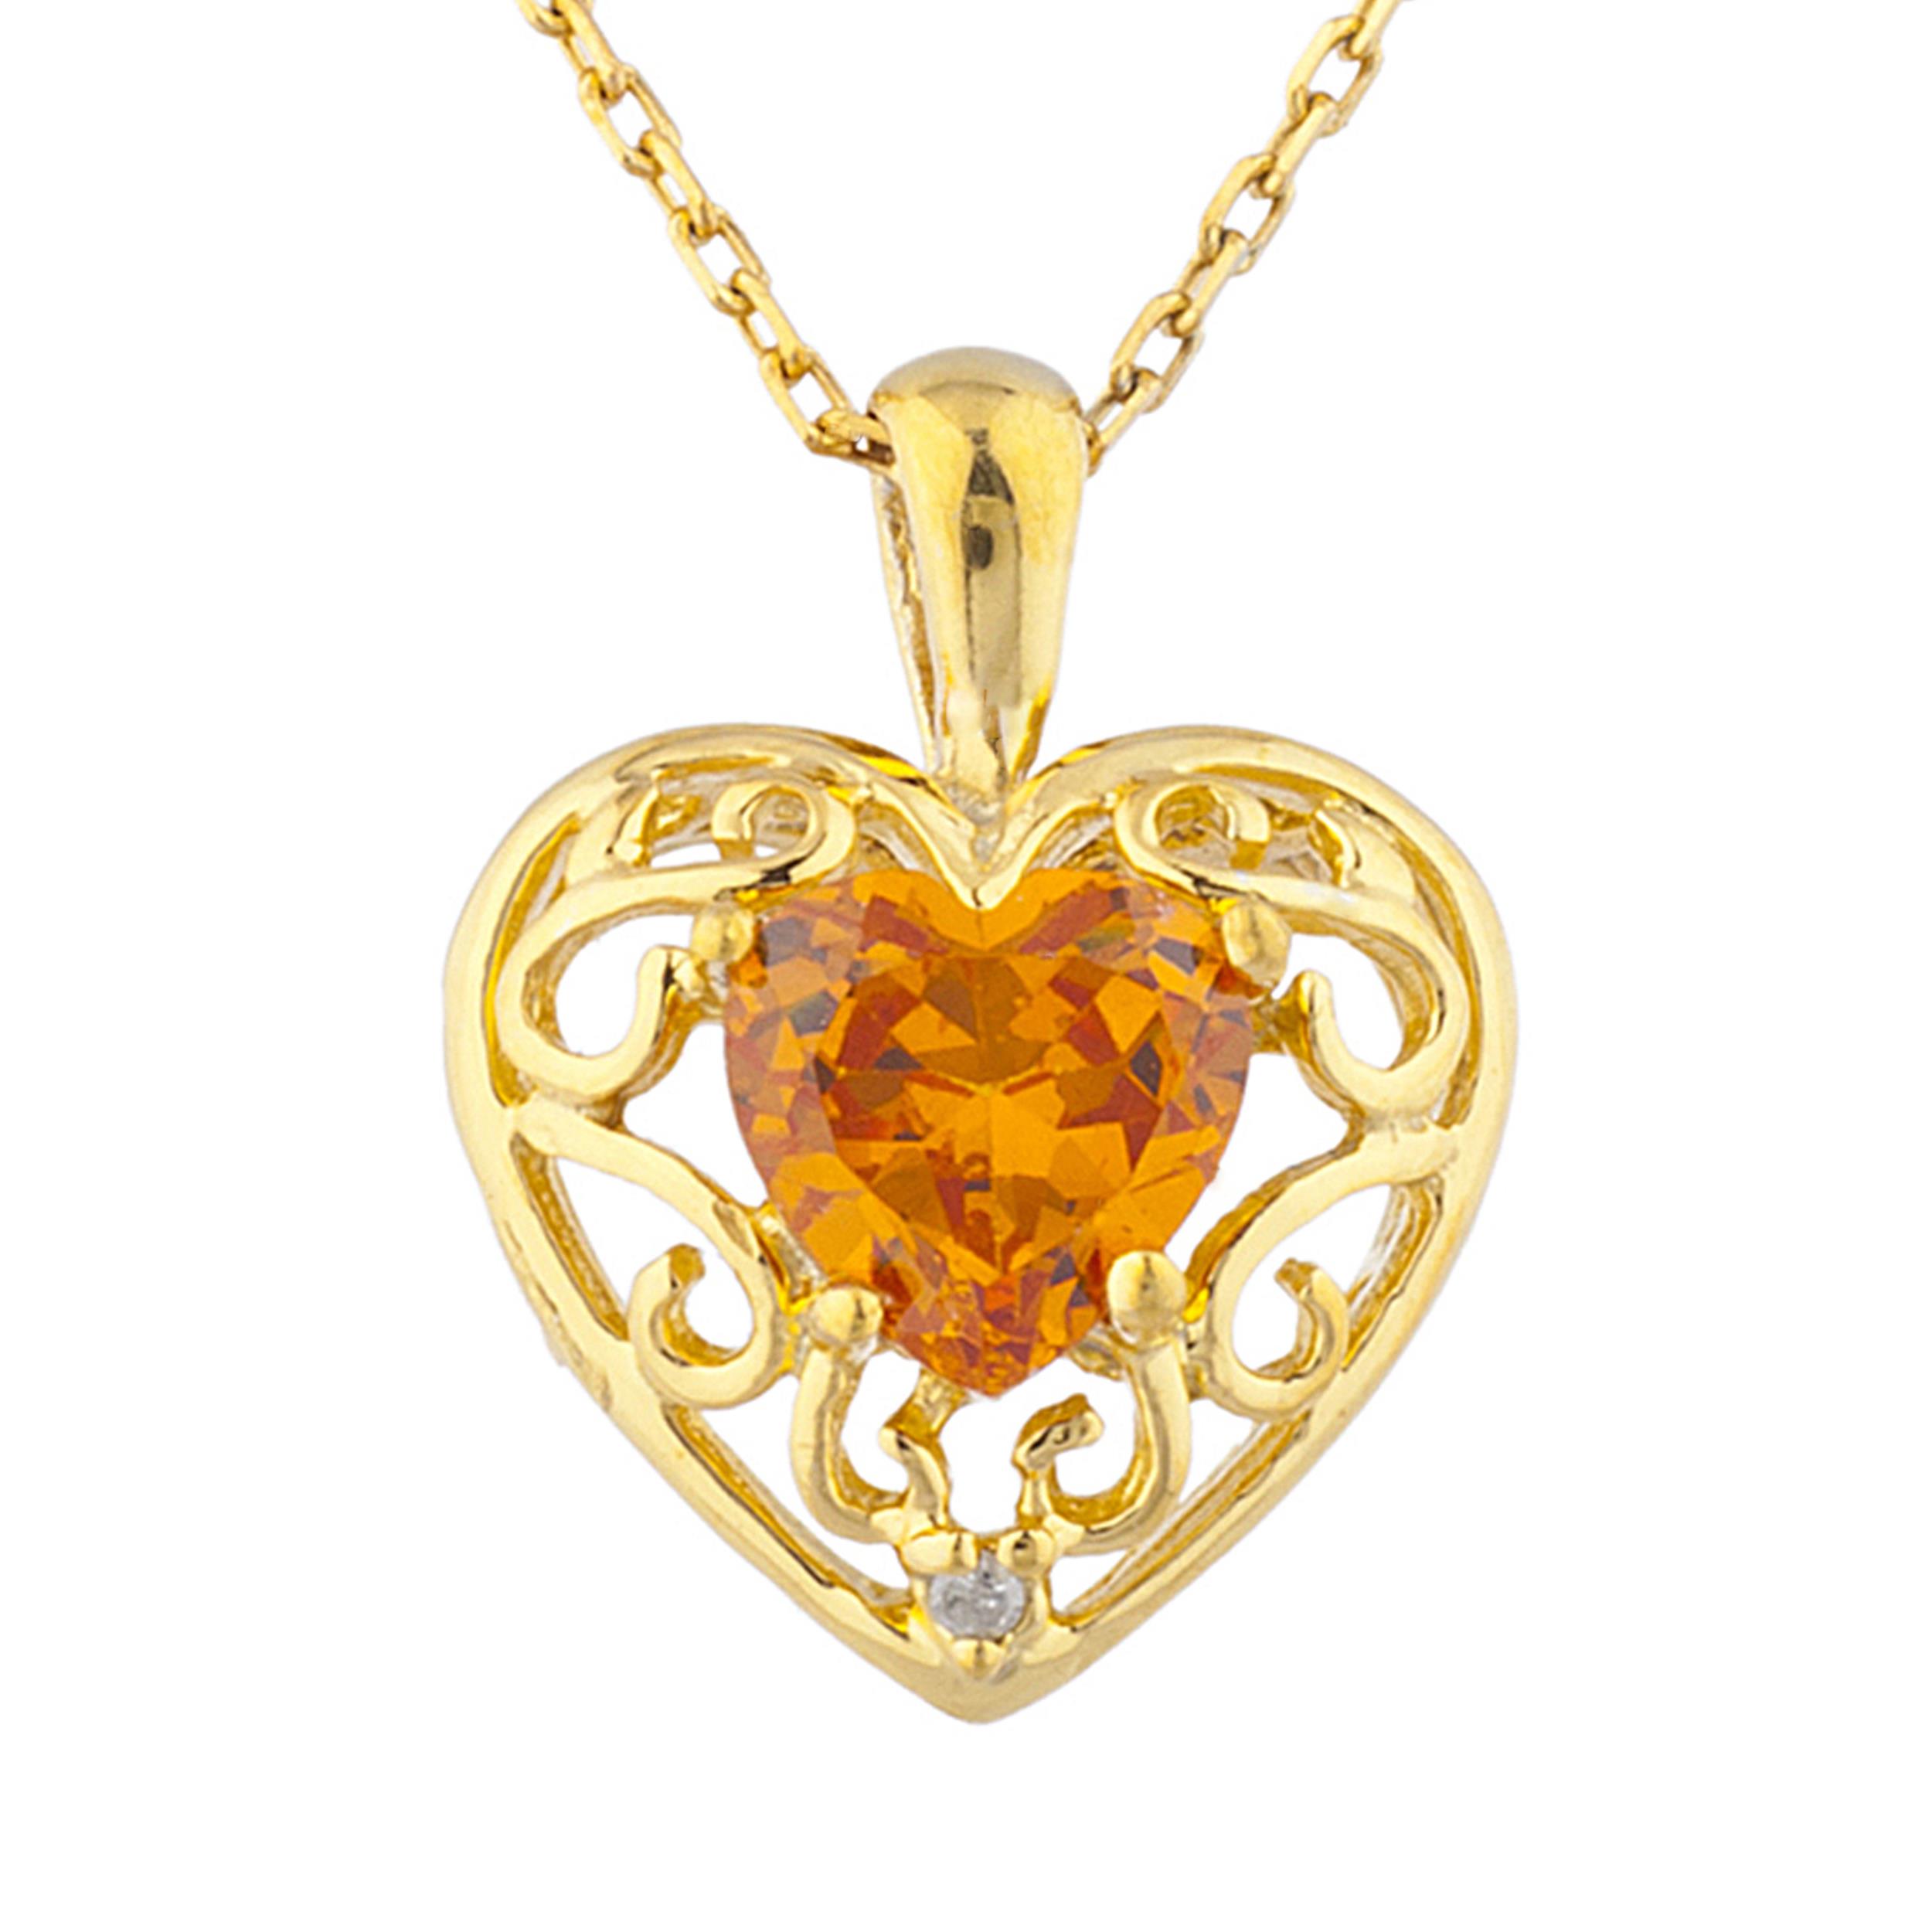 Heart pendant in Orange Design